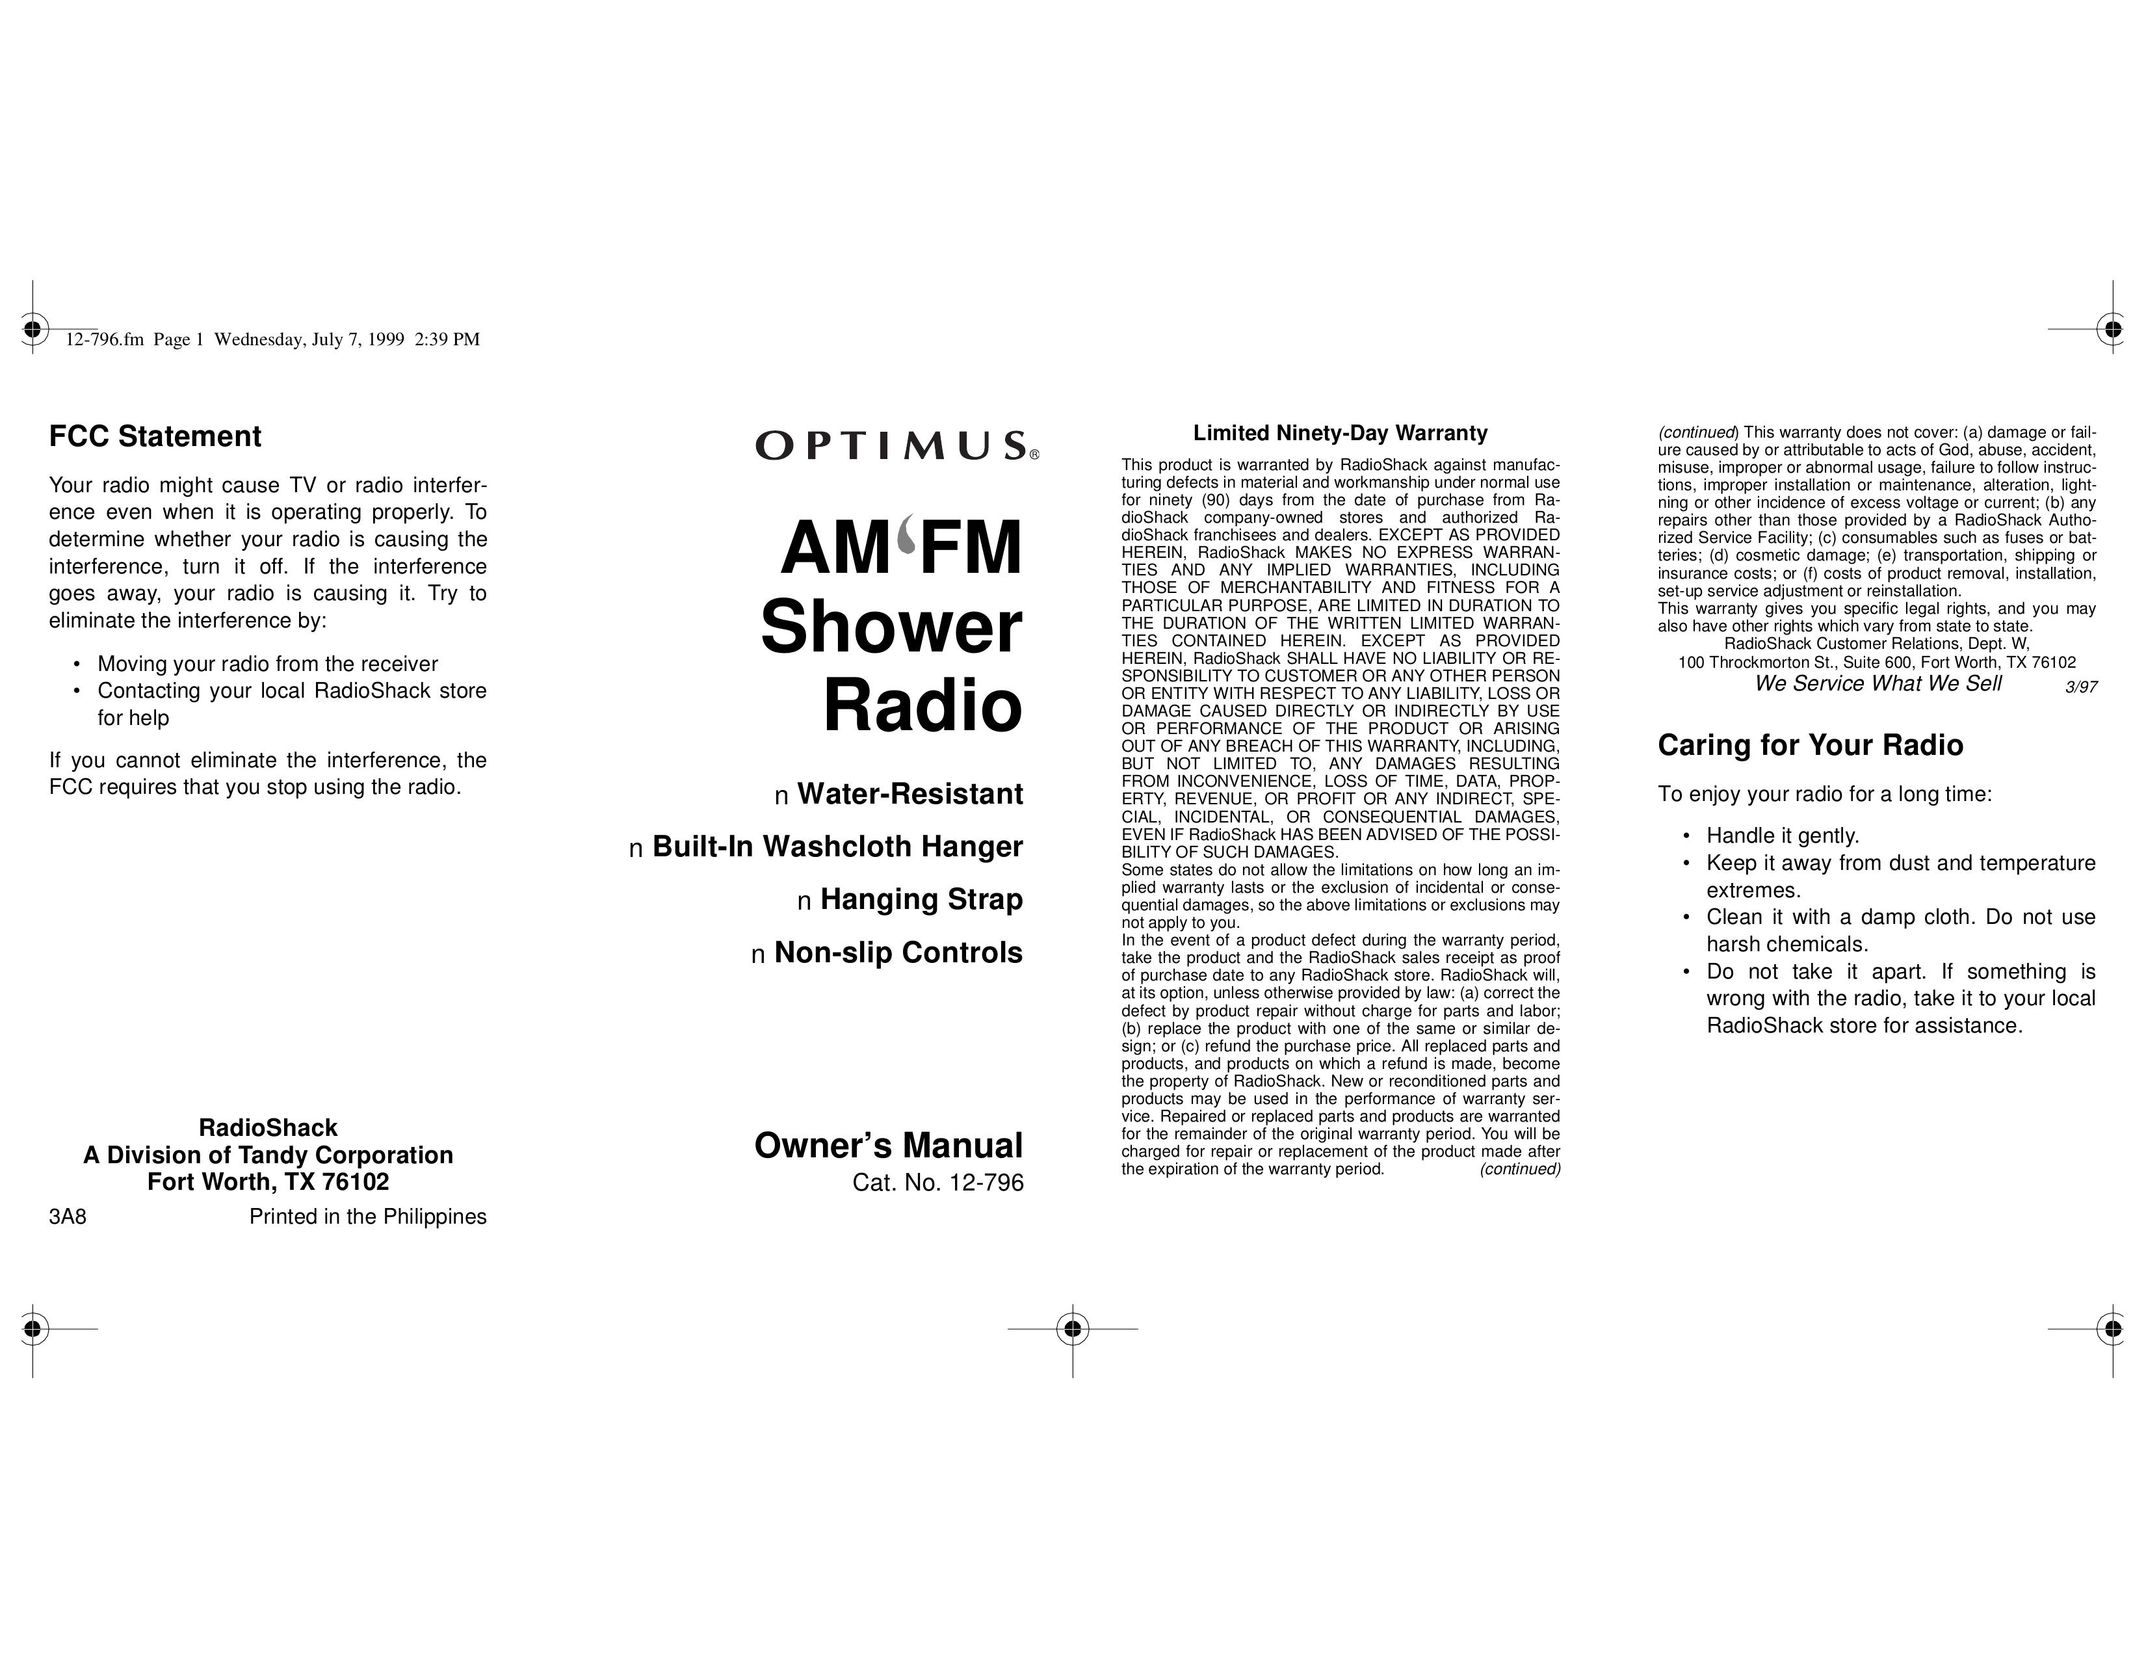 Radio Shack 12-796 Radio User Manual